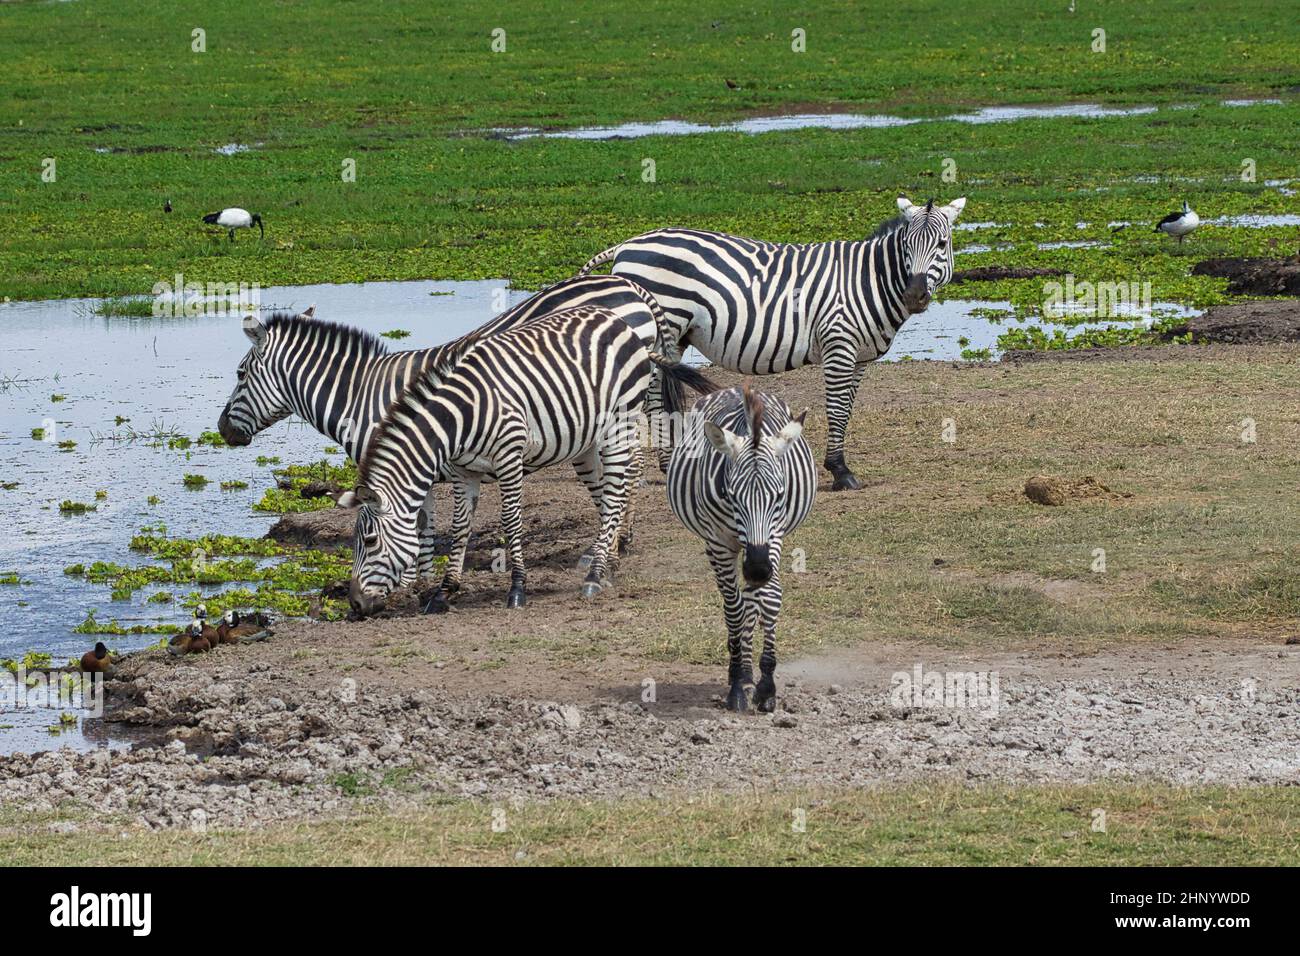 Four plains zebras, Equus quagga, at a waterhole in Amboseli National Park in Kenya. Stock Photo